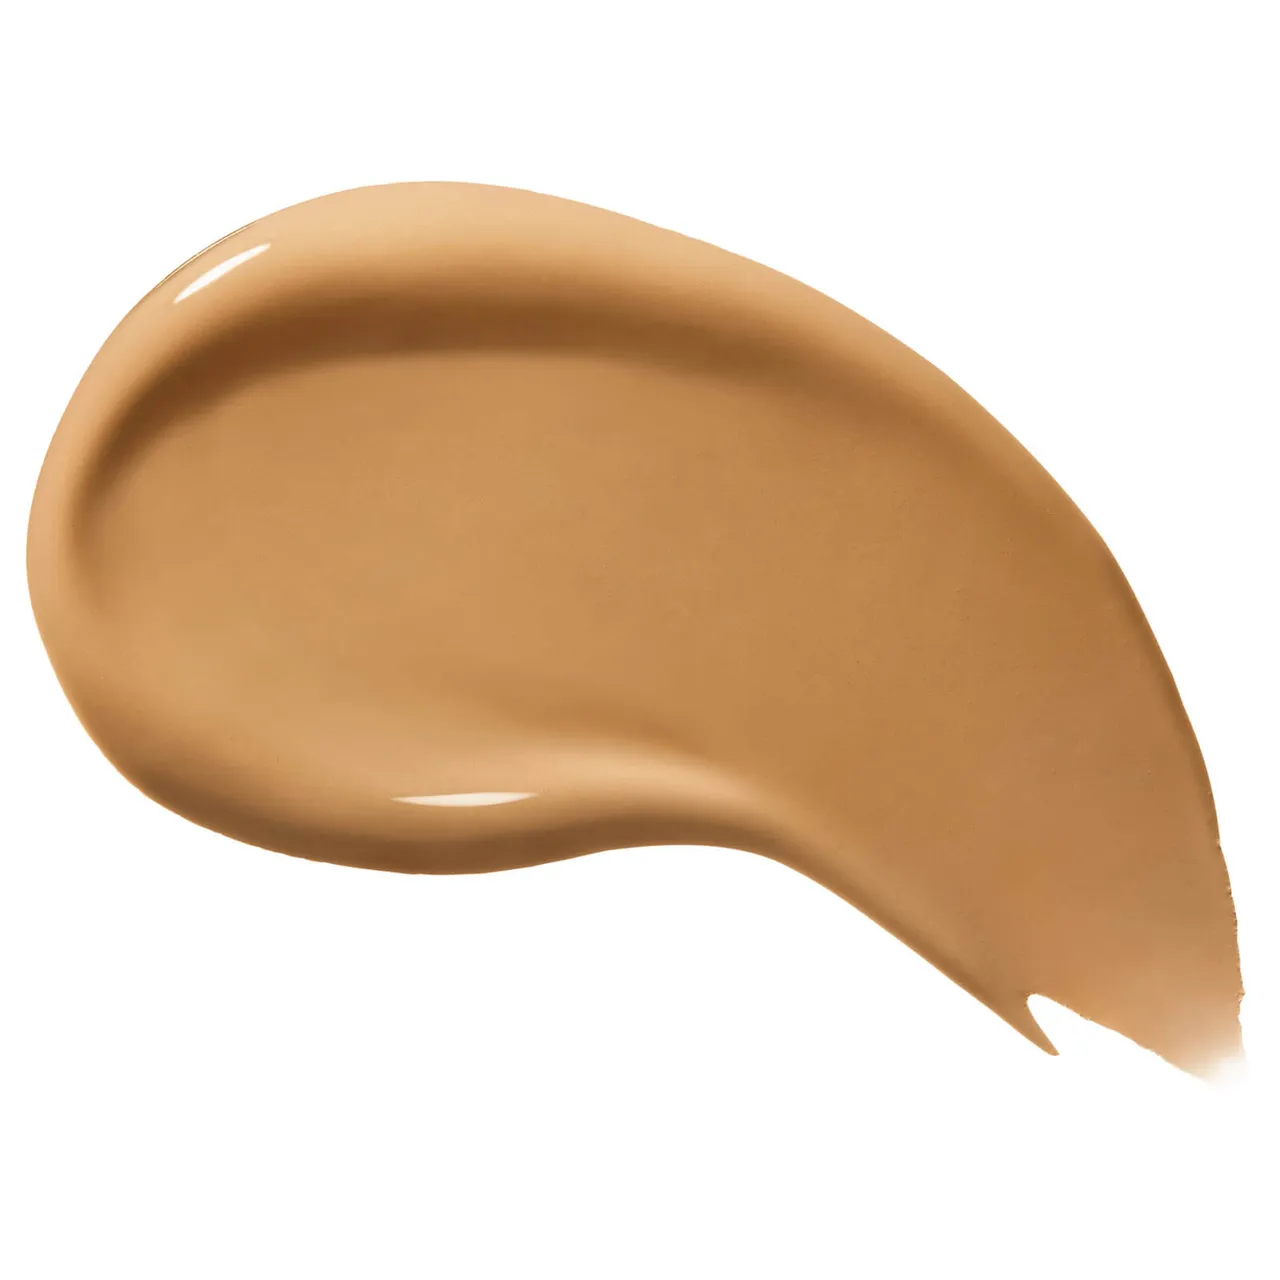 Shiseido Synchro Skin Radiant Lifting SPF30 Foundation 30ml (Various Shades) - 360 Citrine